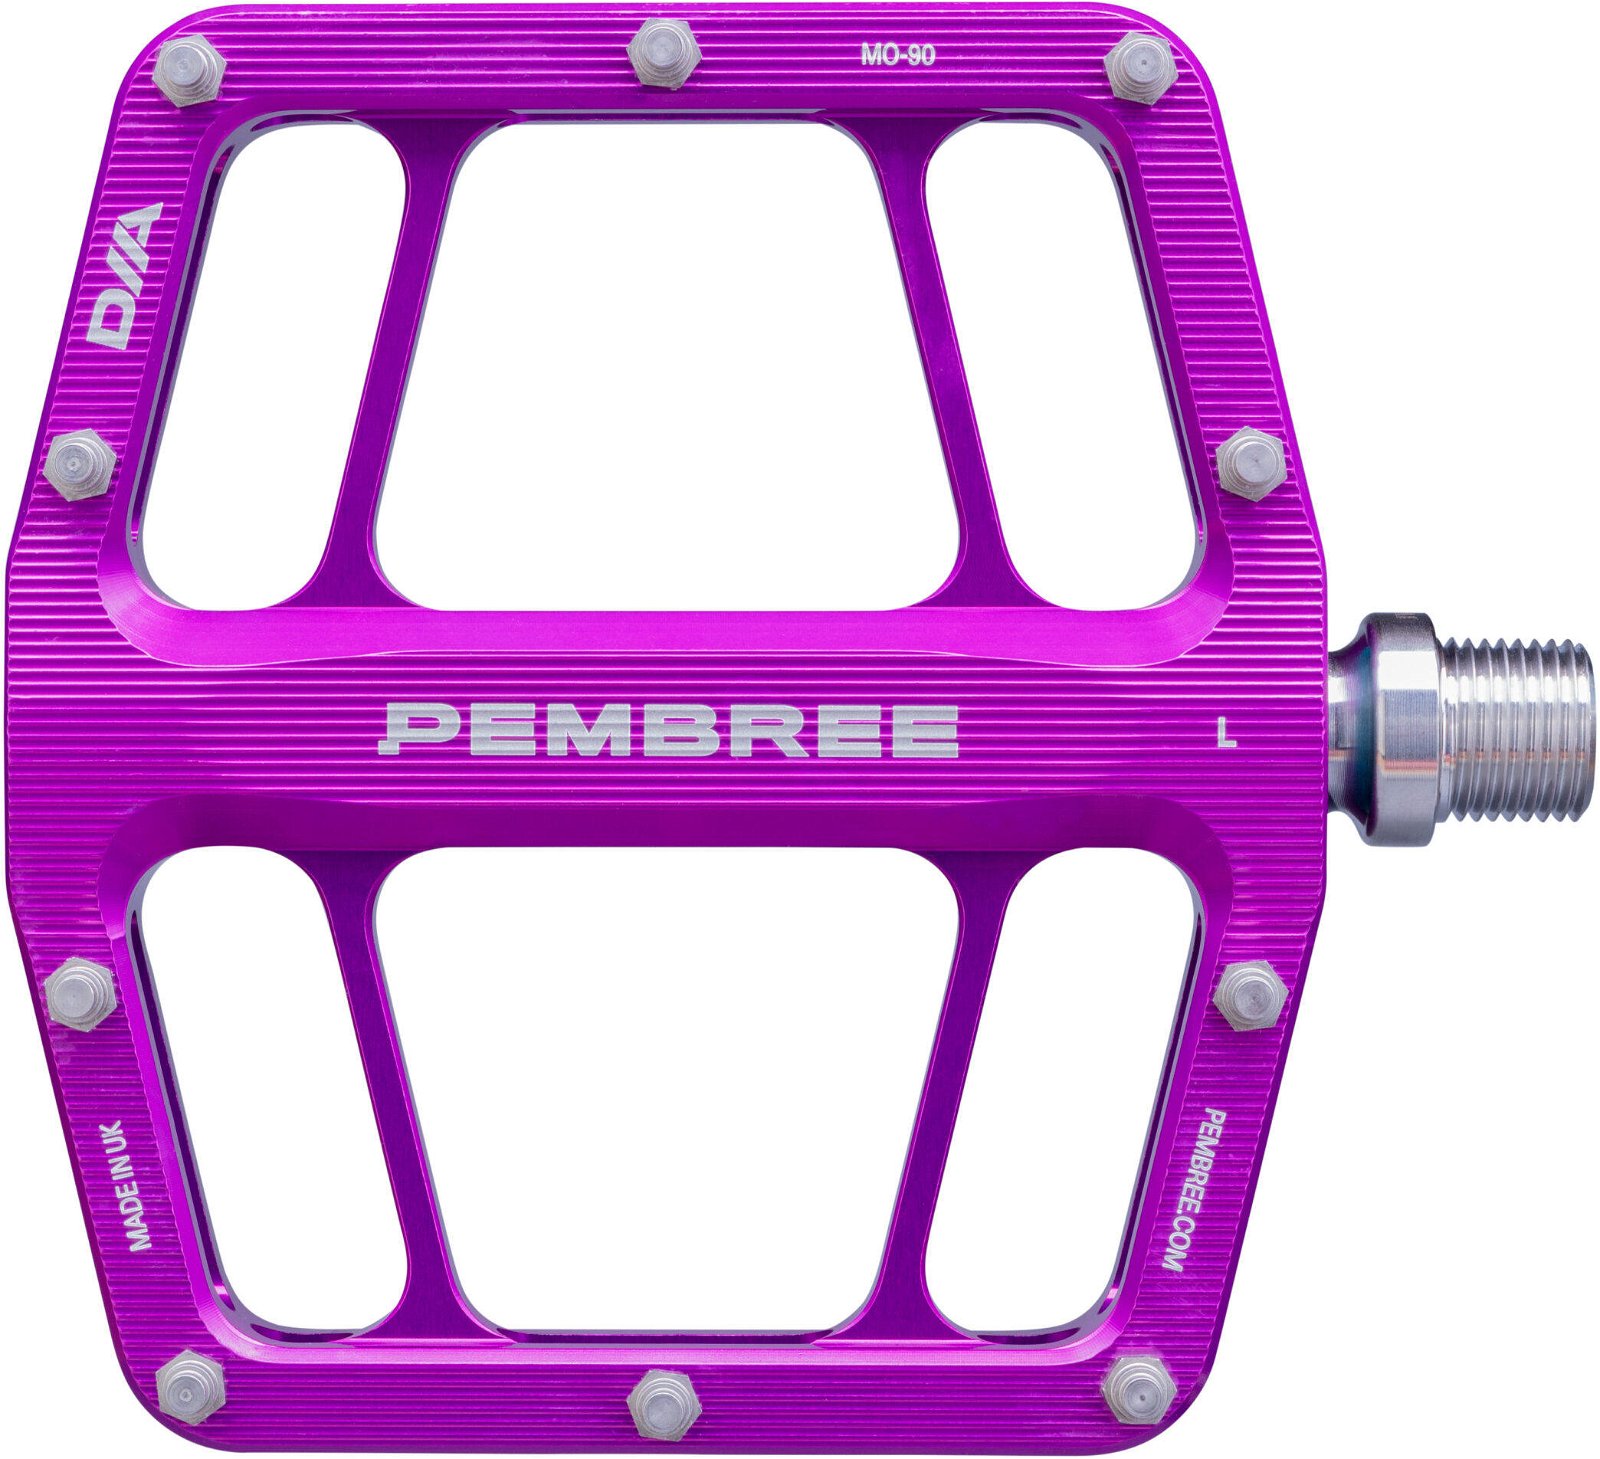 Pembree D2A Flat Pedal